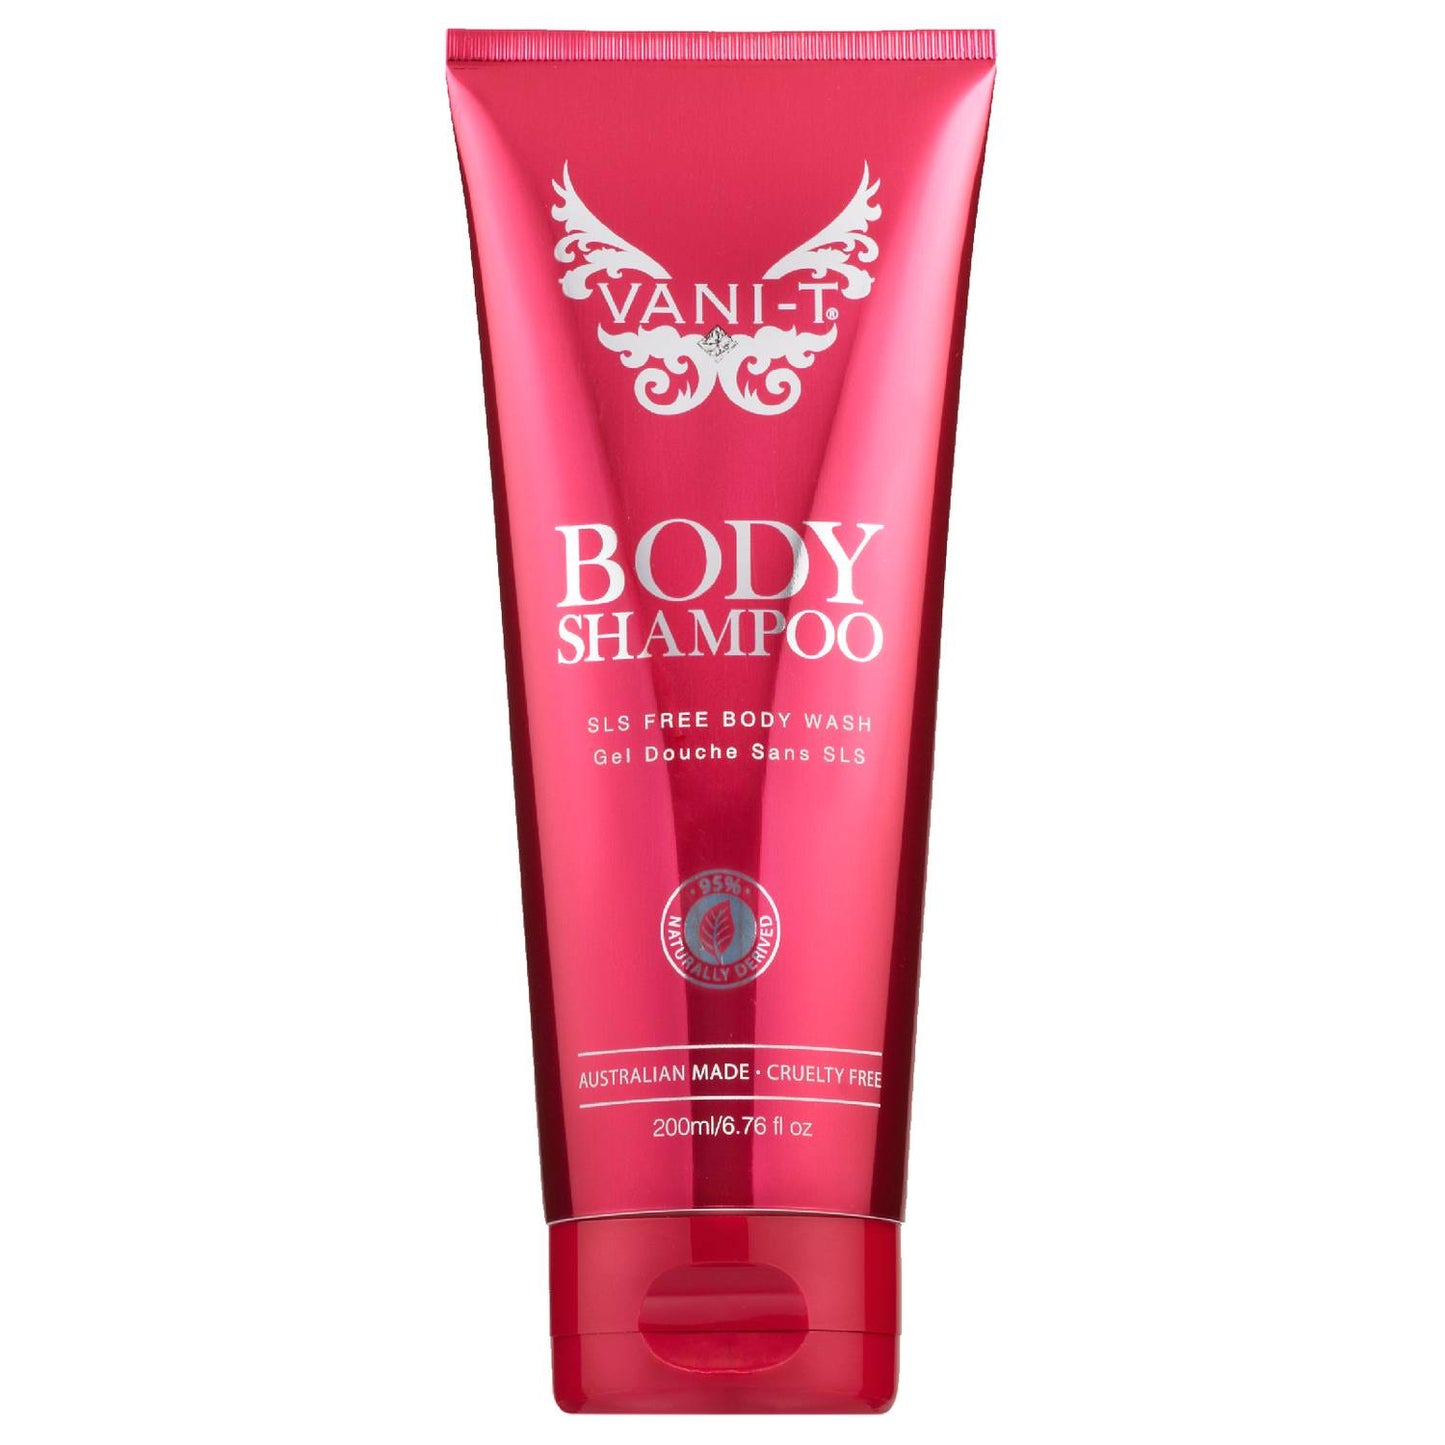 Vani-T body shampoo